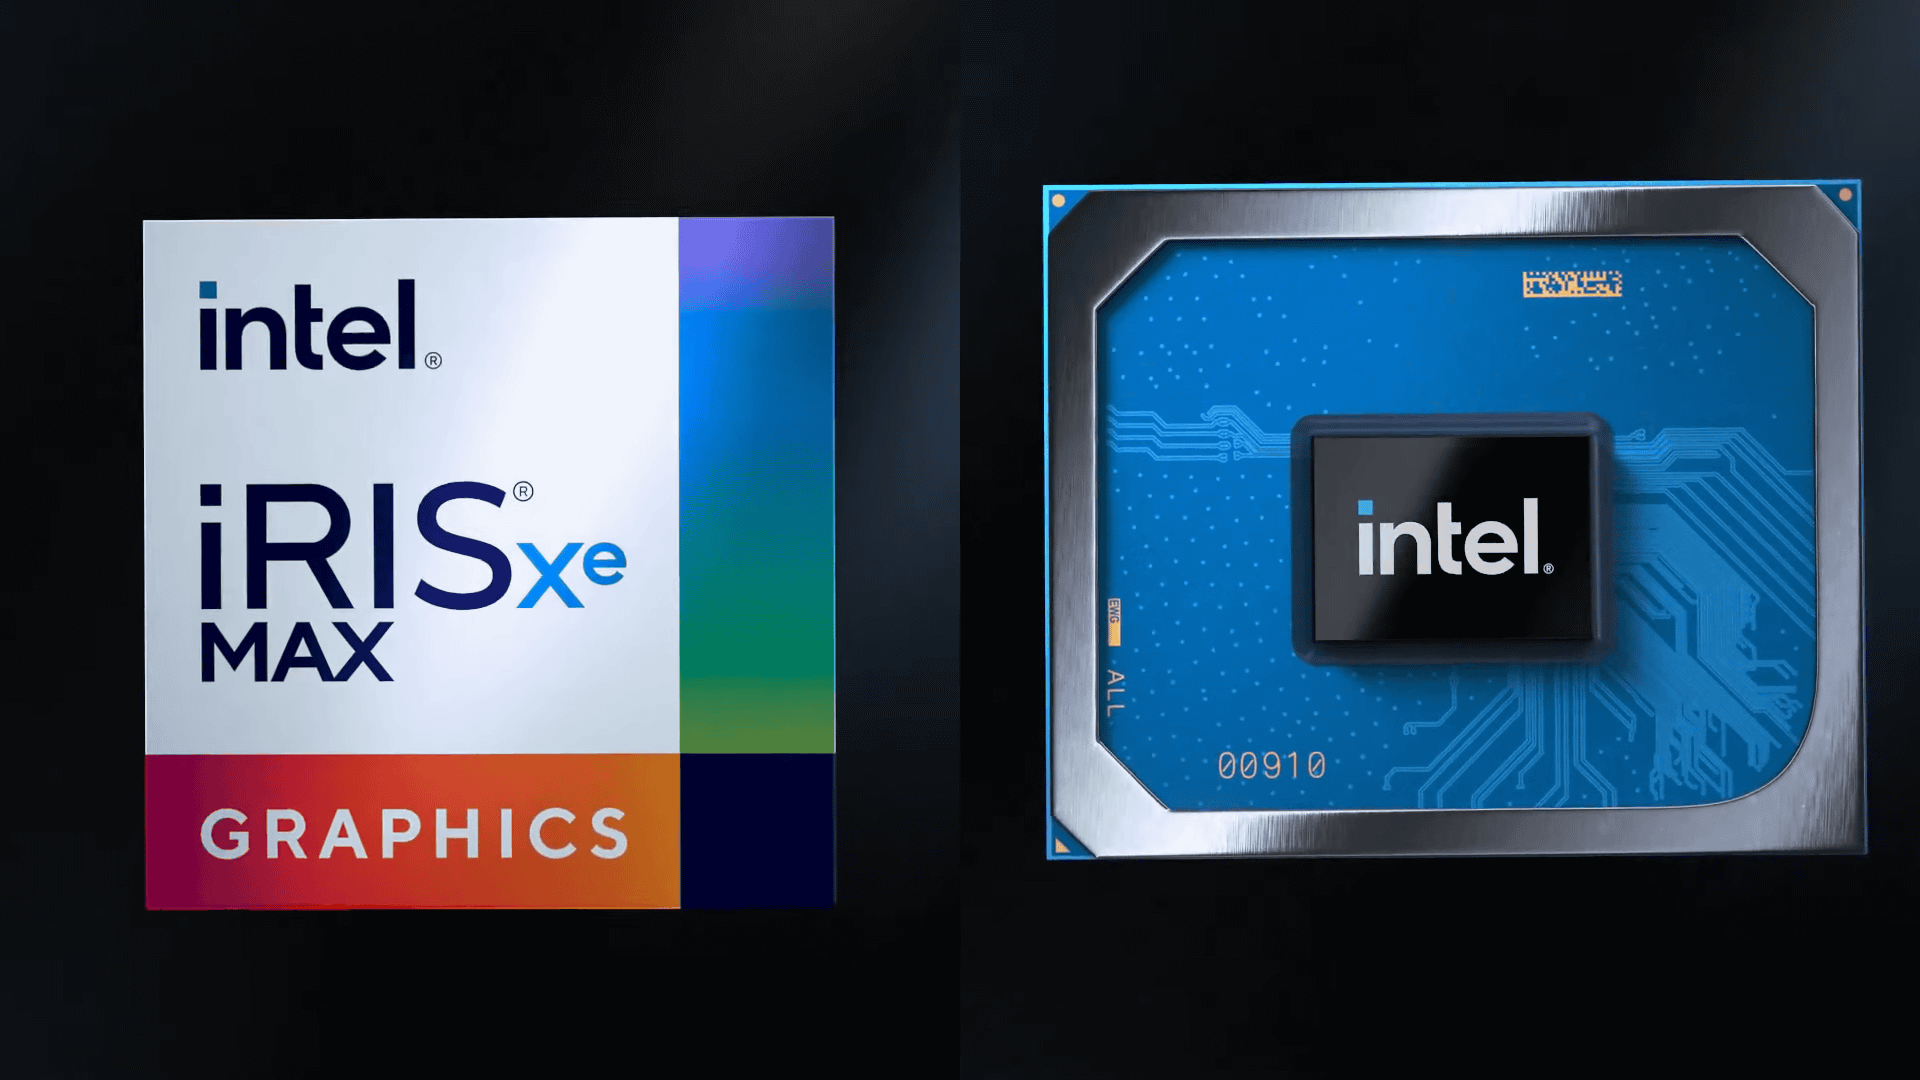 Intelが22年ぶりとなるディスクリートGPU「Iris Xe MAX」を正式に発表 - GIGAZINE